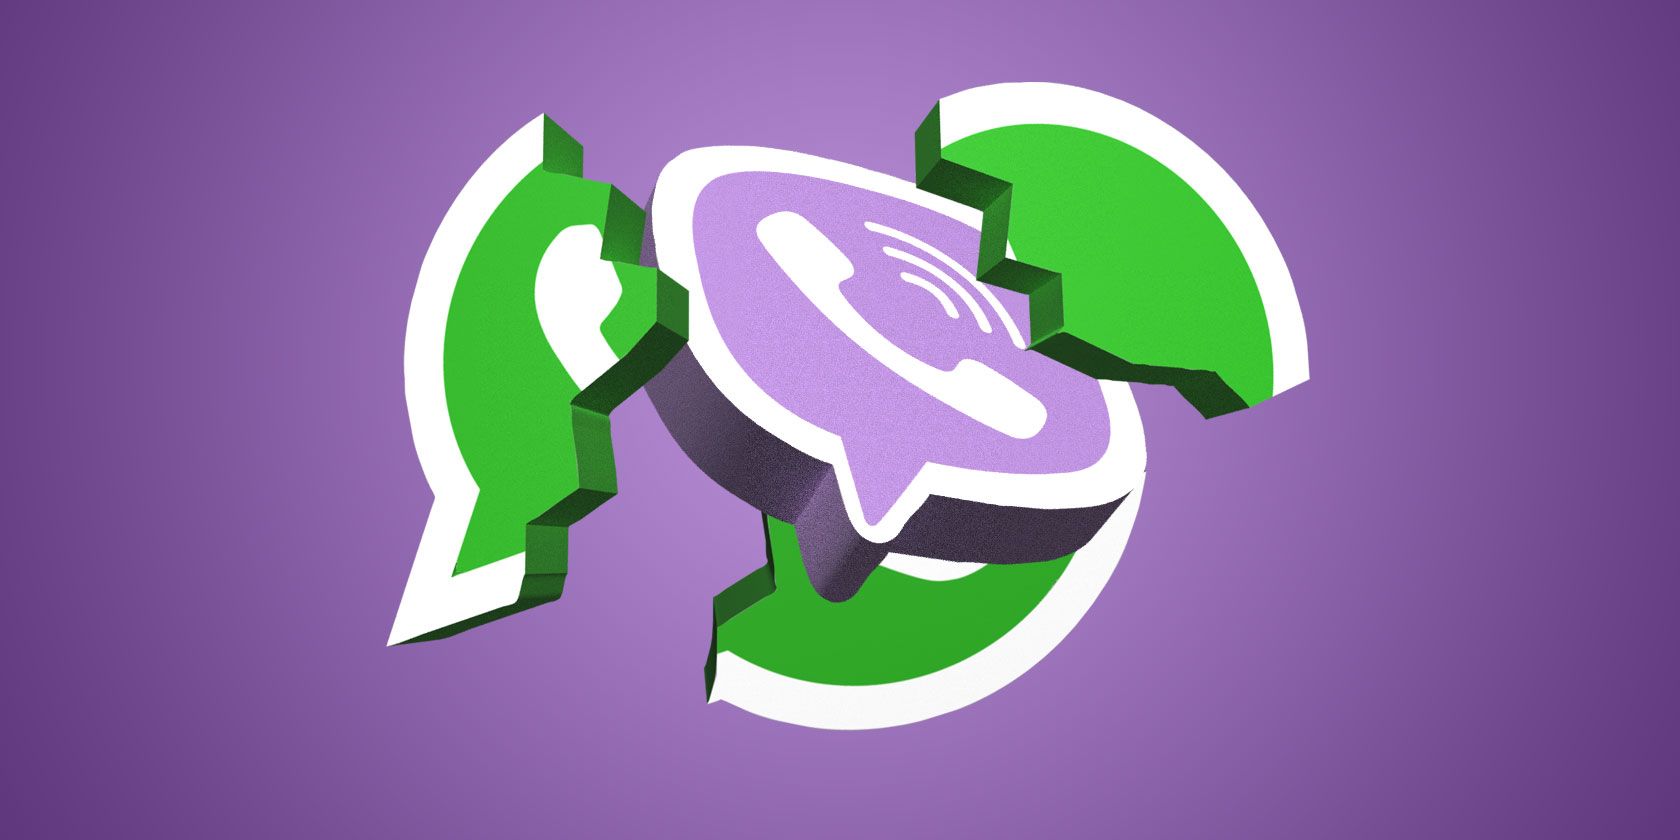 viber vs whatsapp data usage messaging